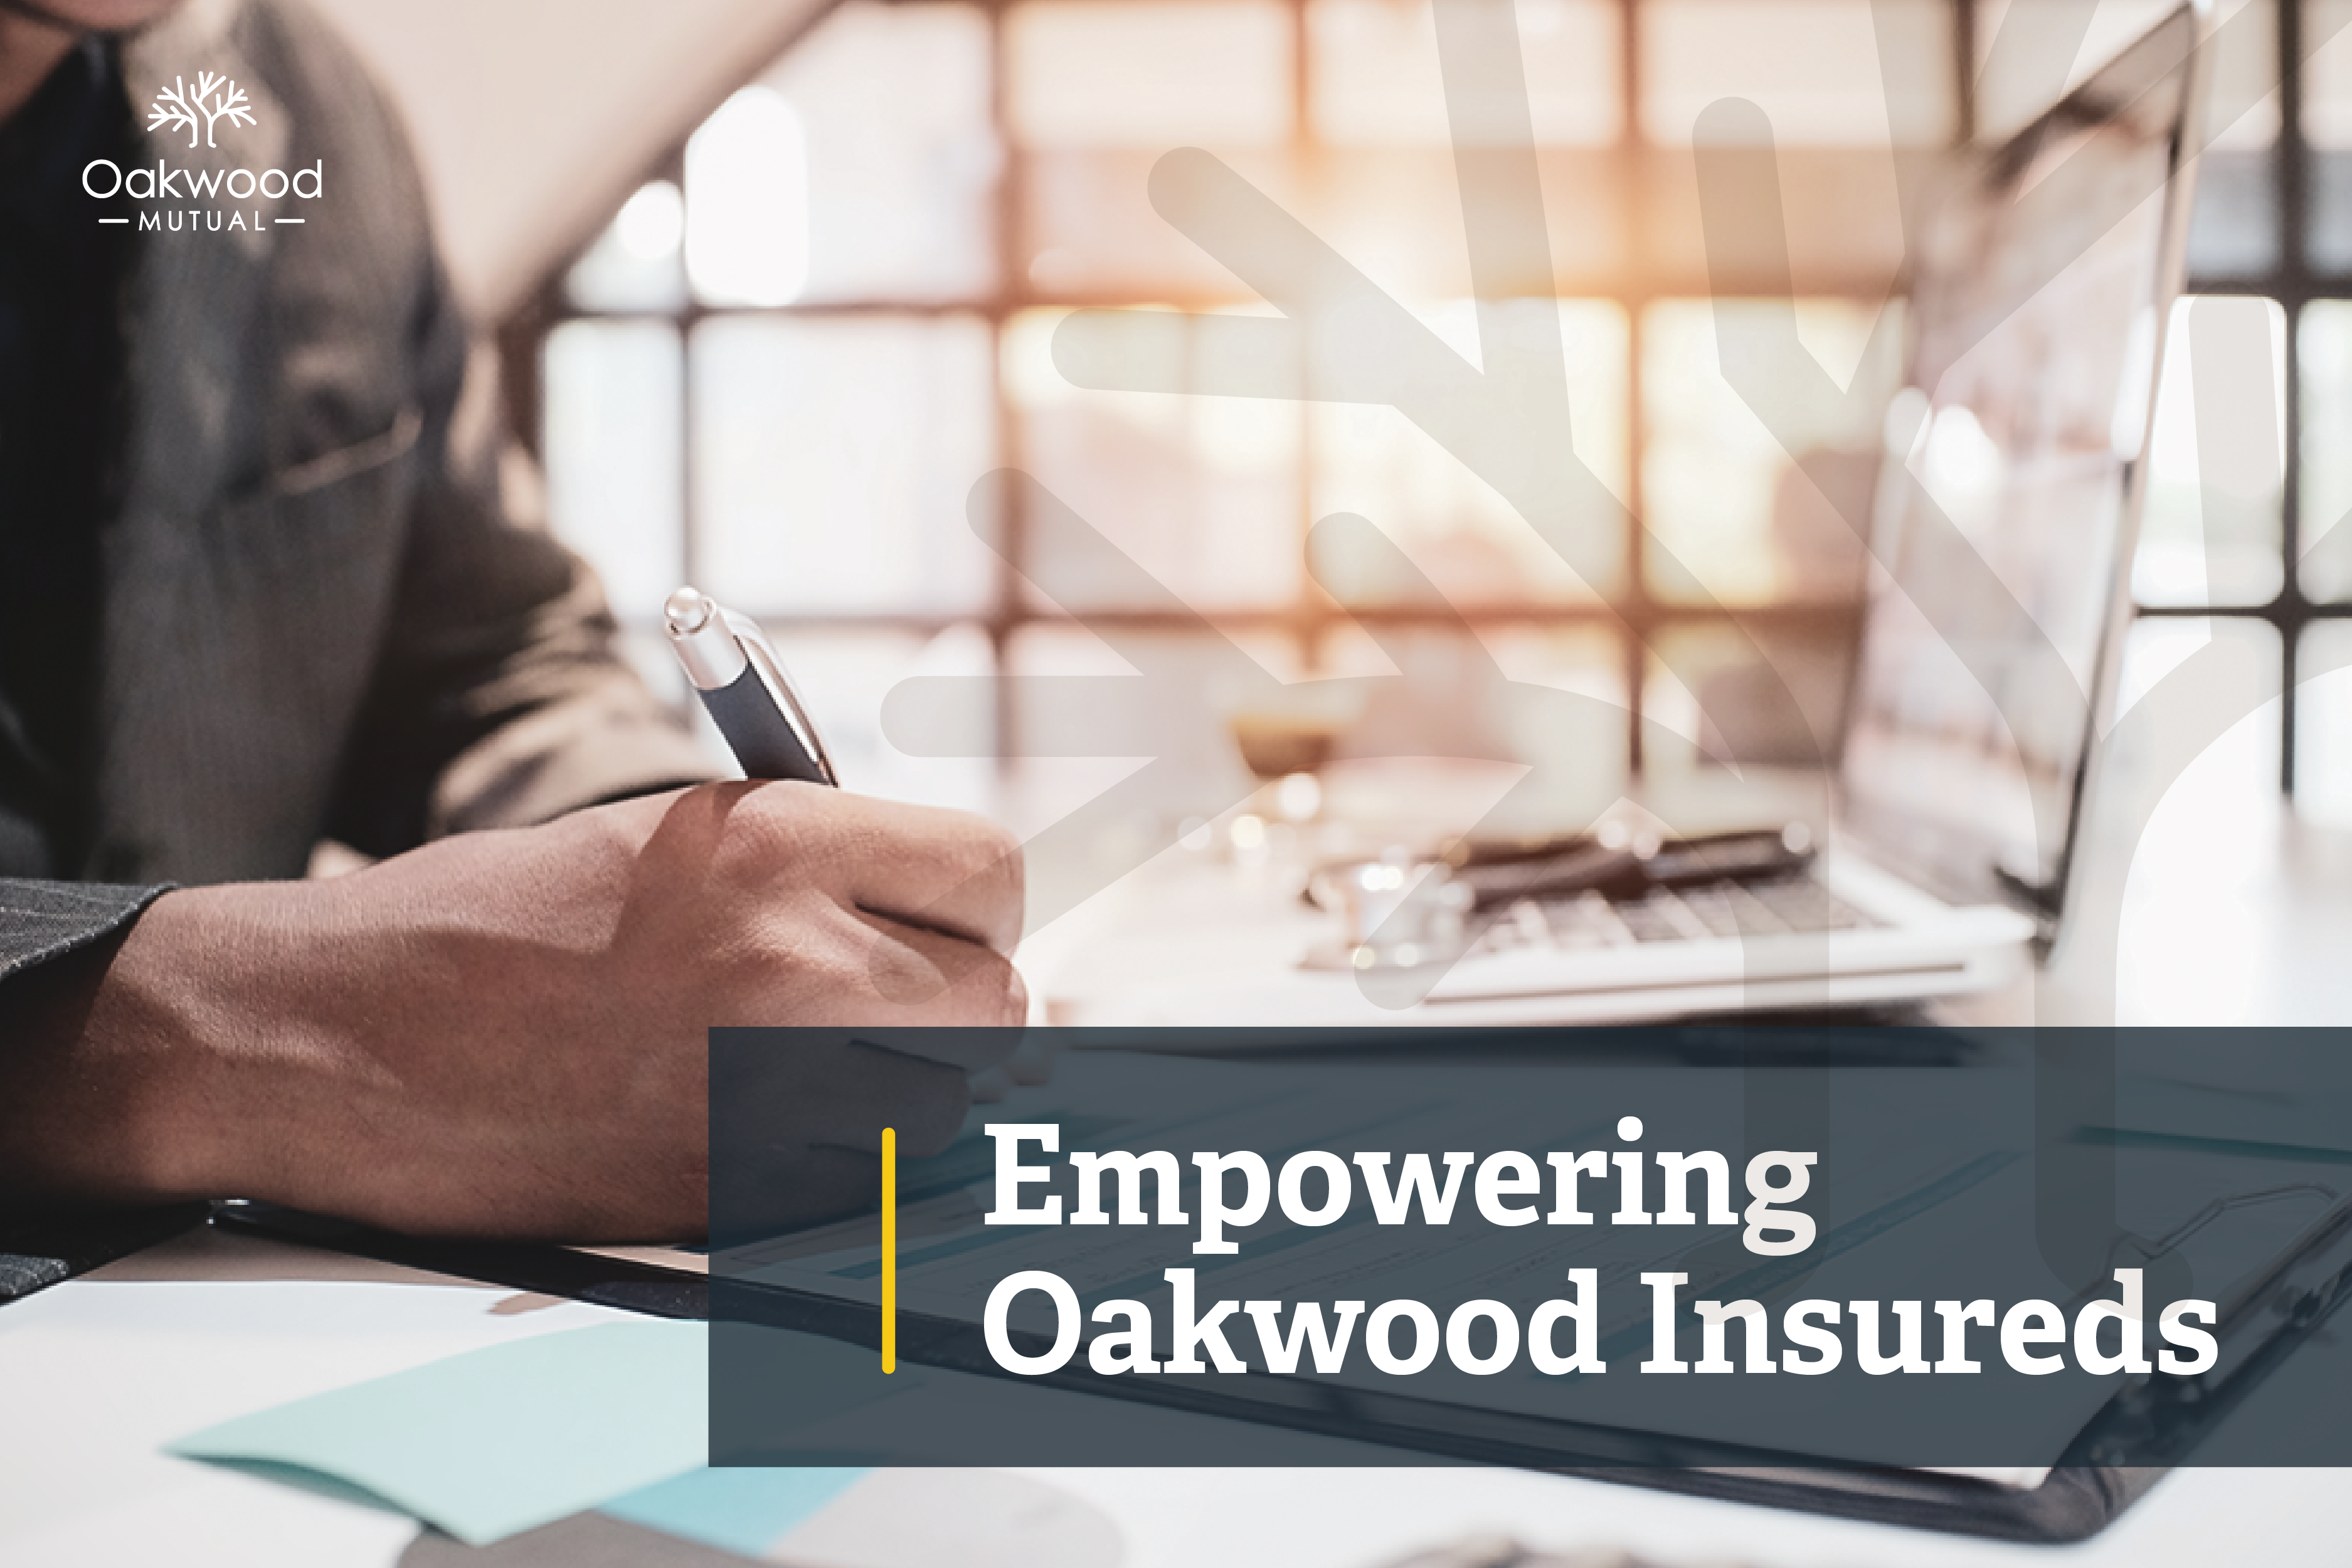 7201E_Conclusion_Empowering Oakwood Insureds_CTA-2